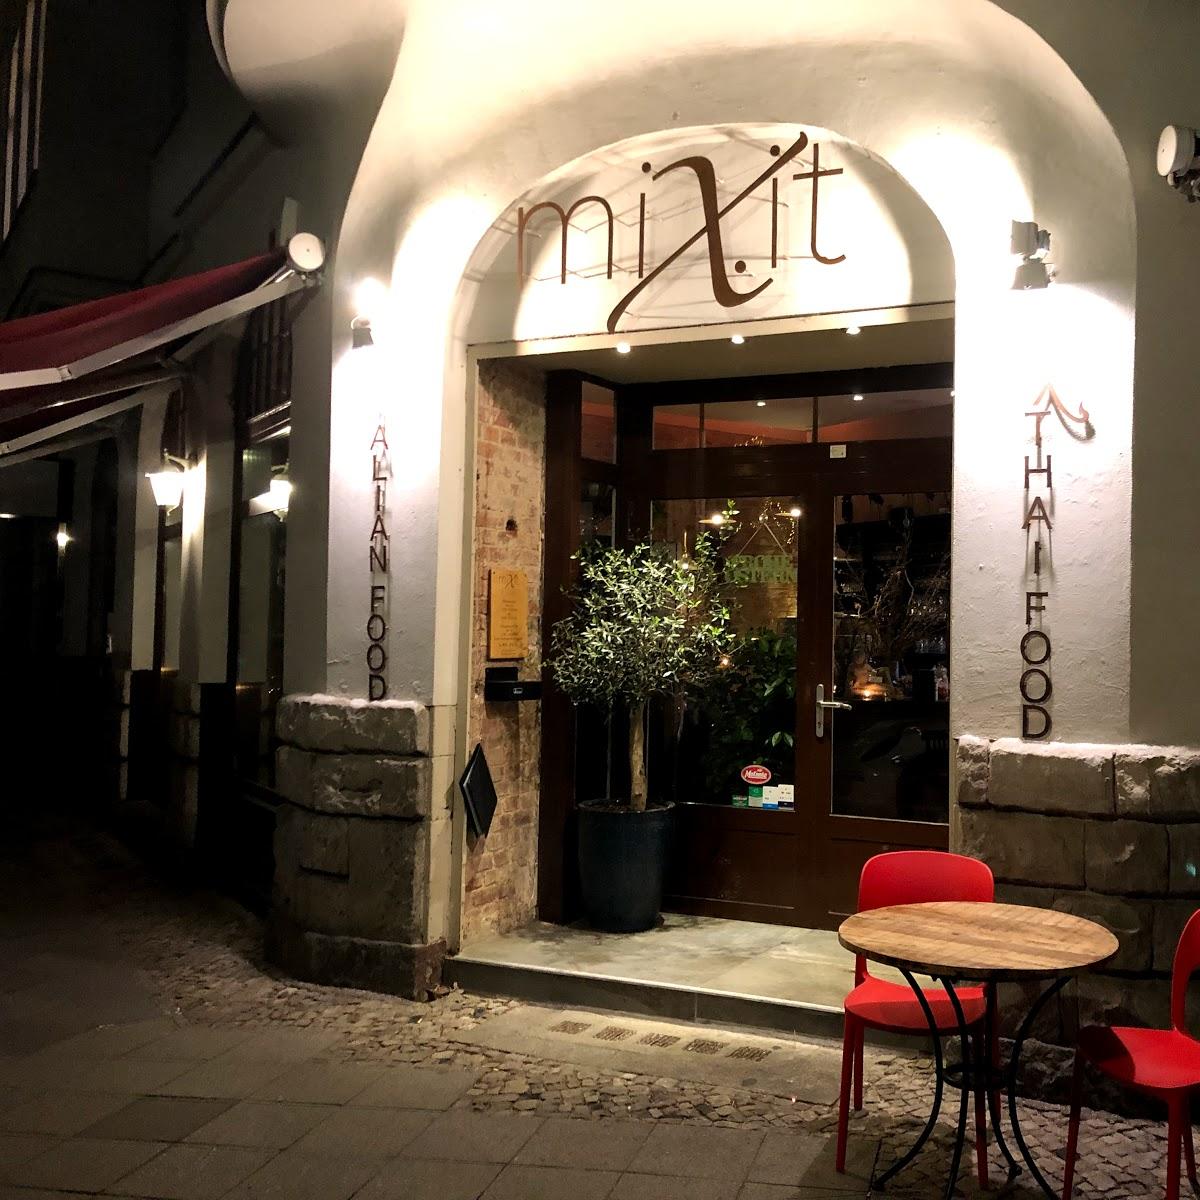 Restaurant "miX.it Italian Thai Food" in Berlin